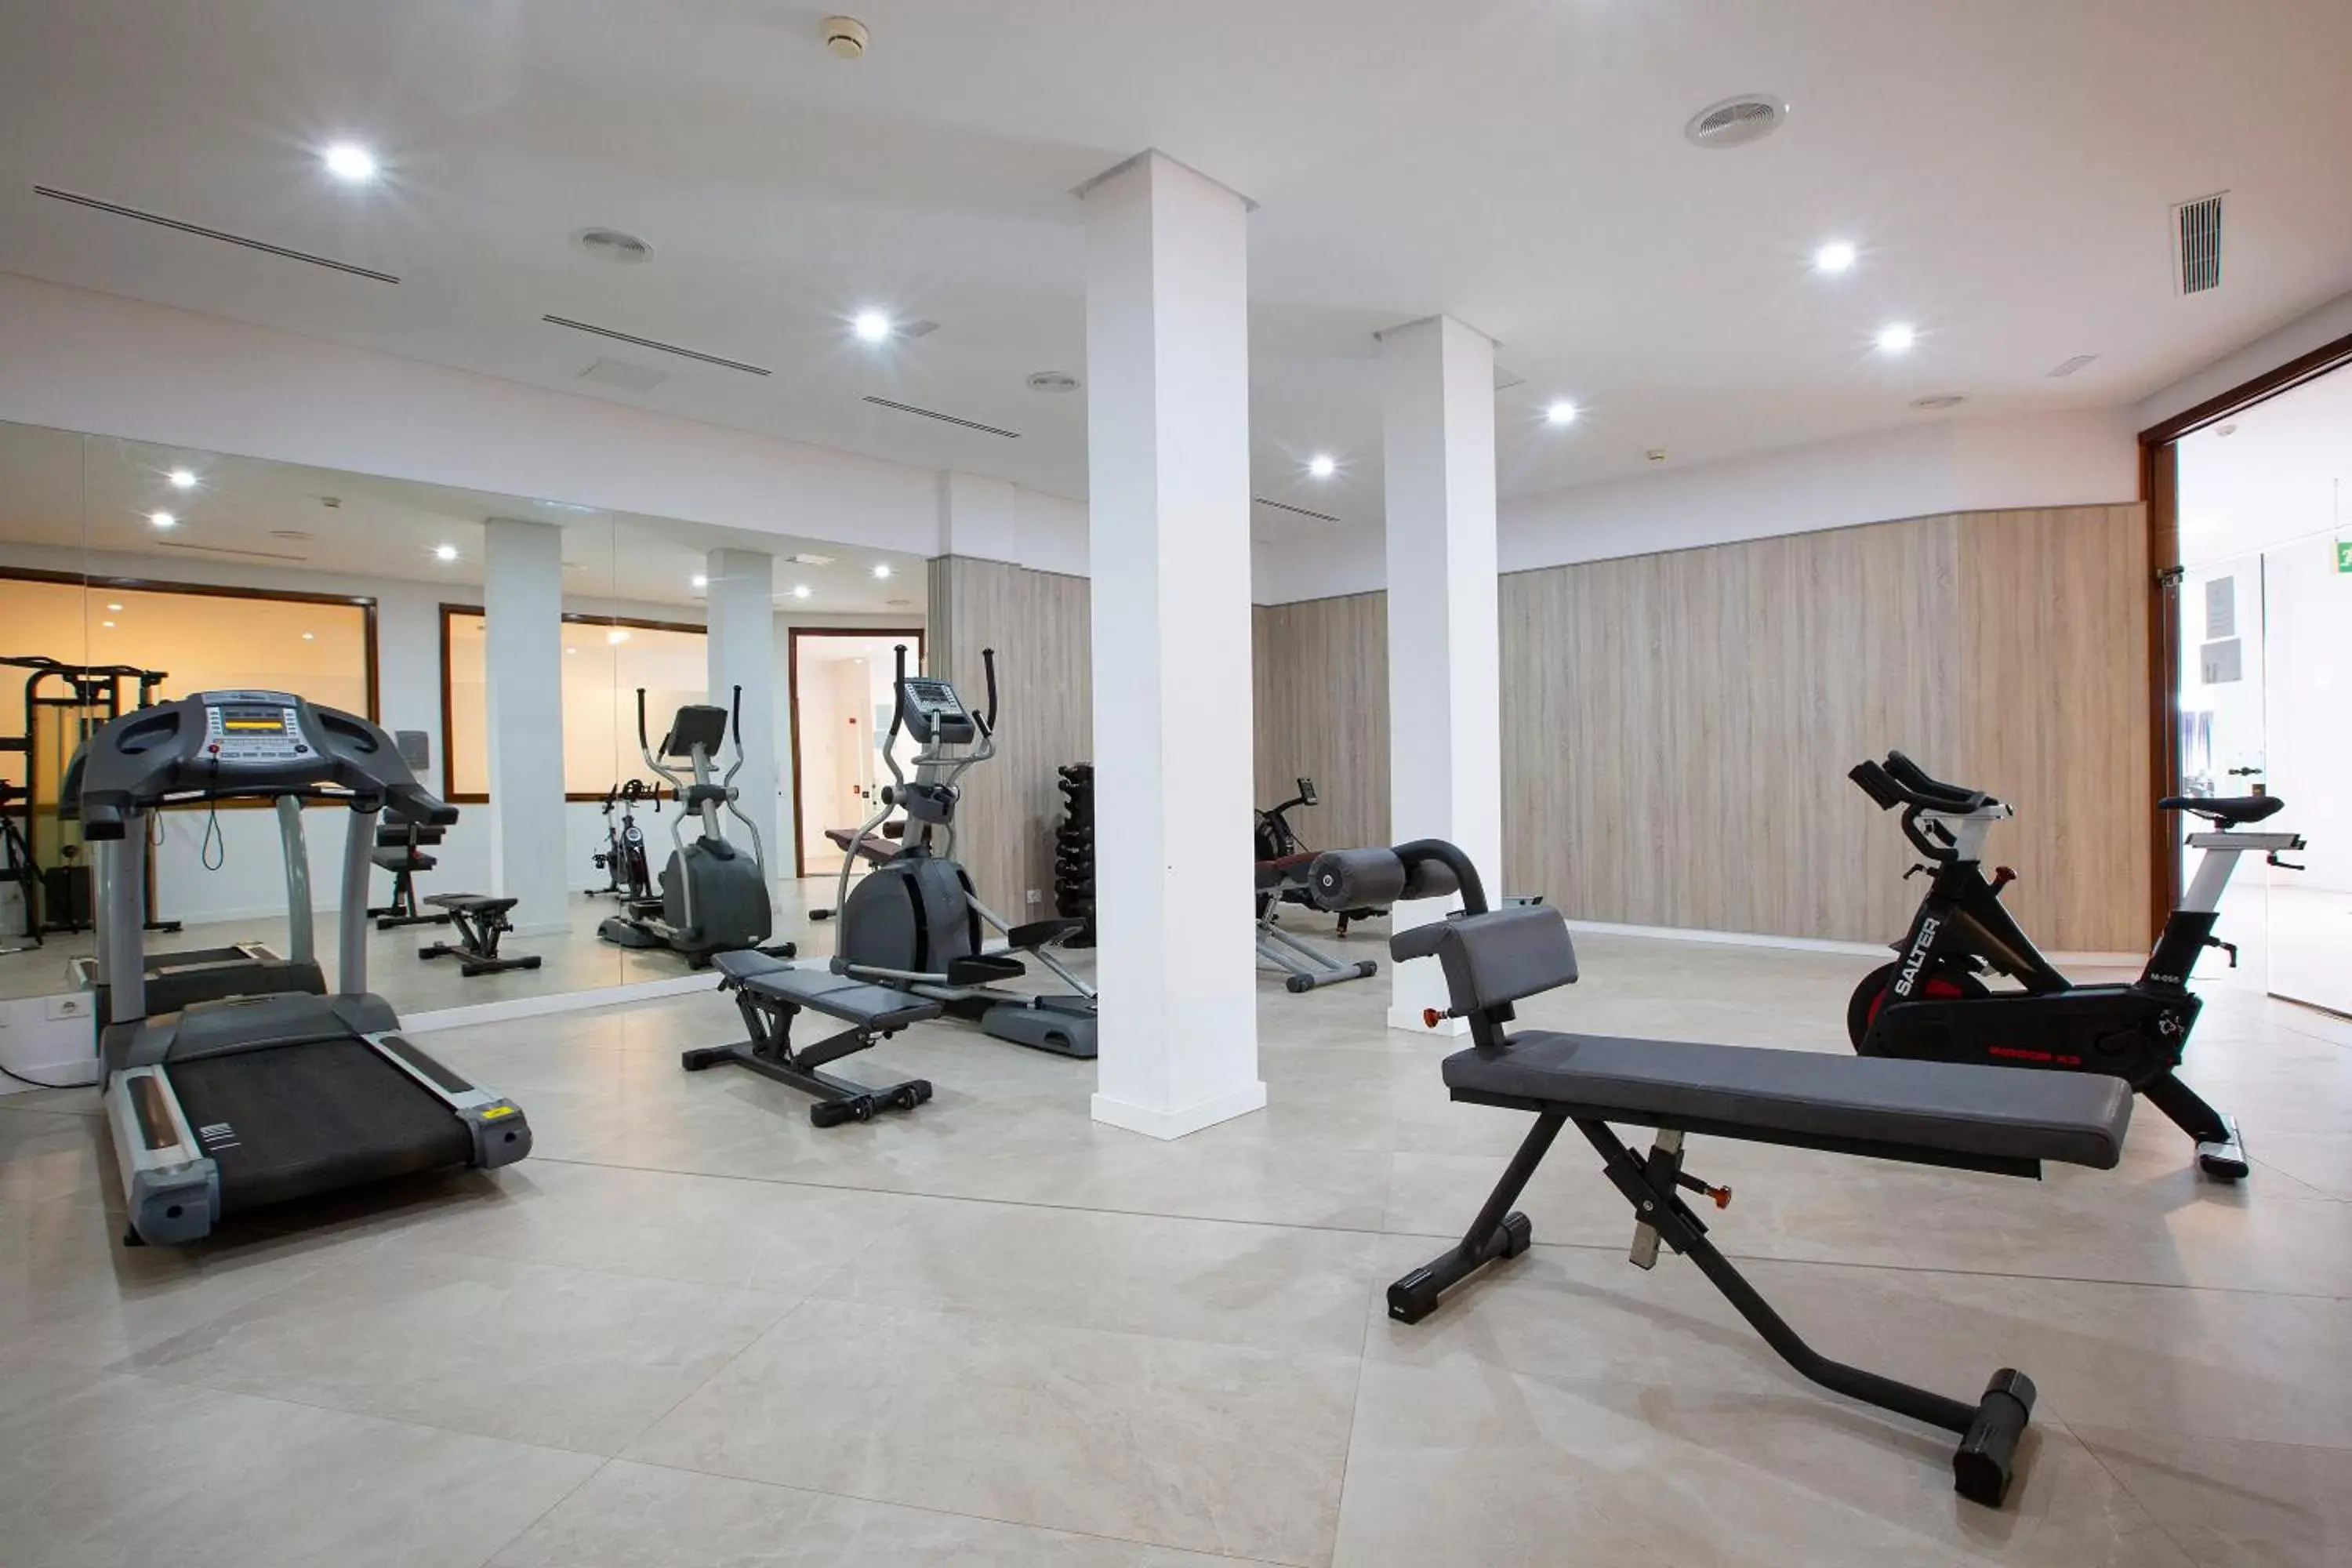 Fitness centre/facilities, Fitness Center/Facilities in Hipotels La Geria